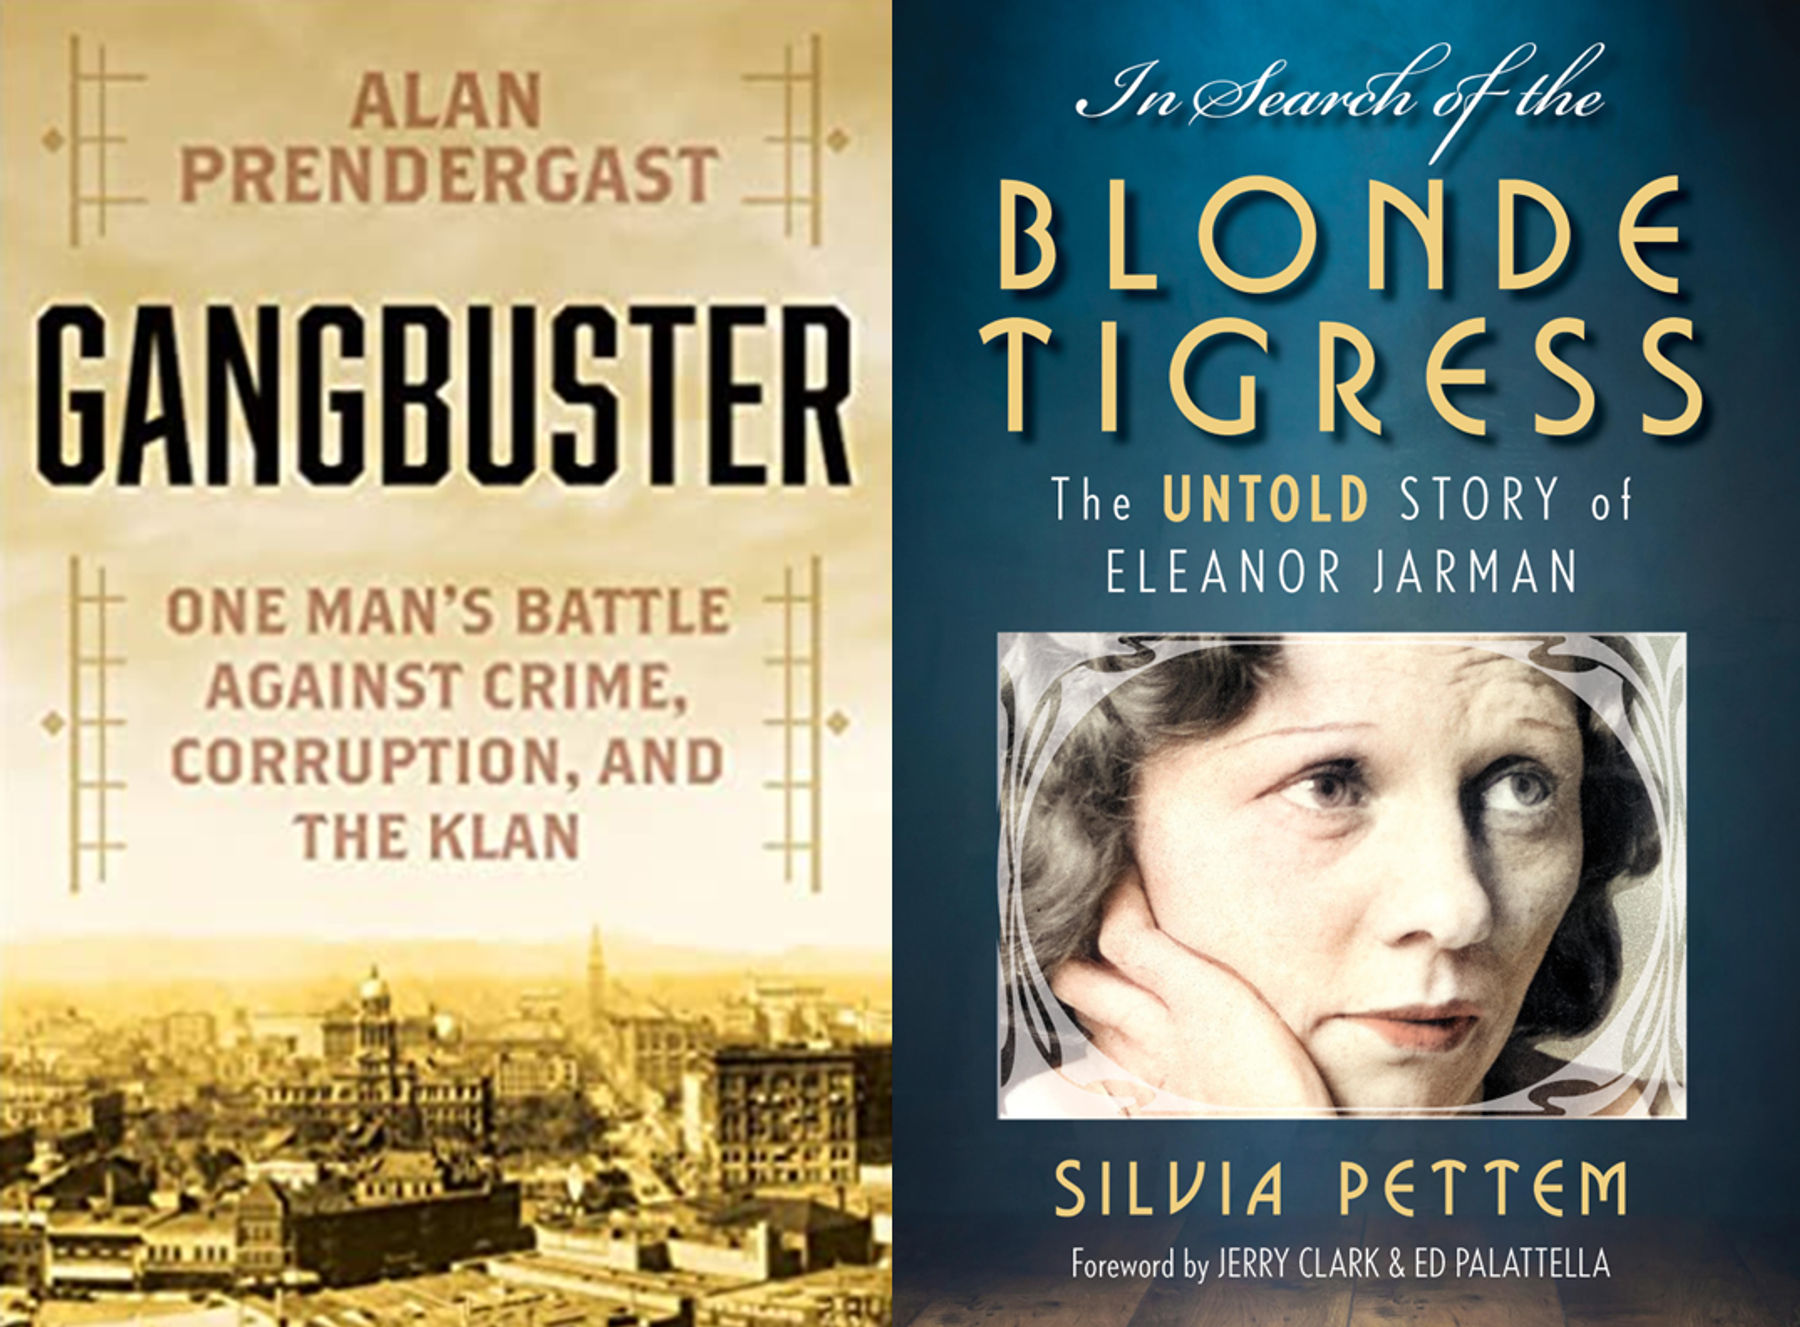 Historical True Crime Authors Alan Prendergast and Silvia Pettem